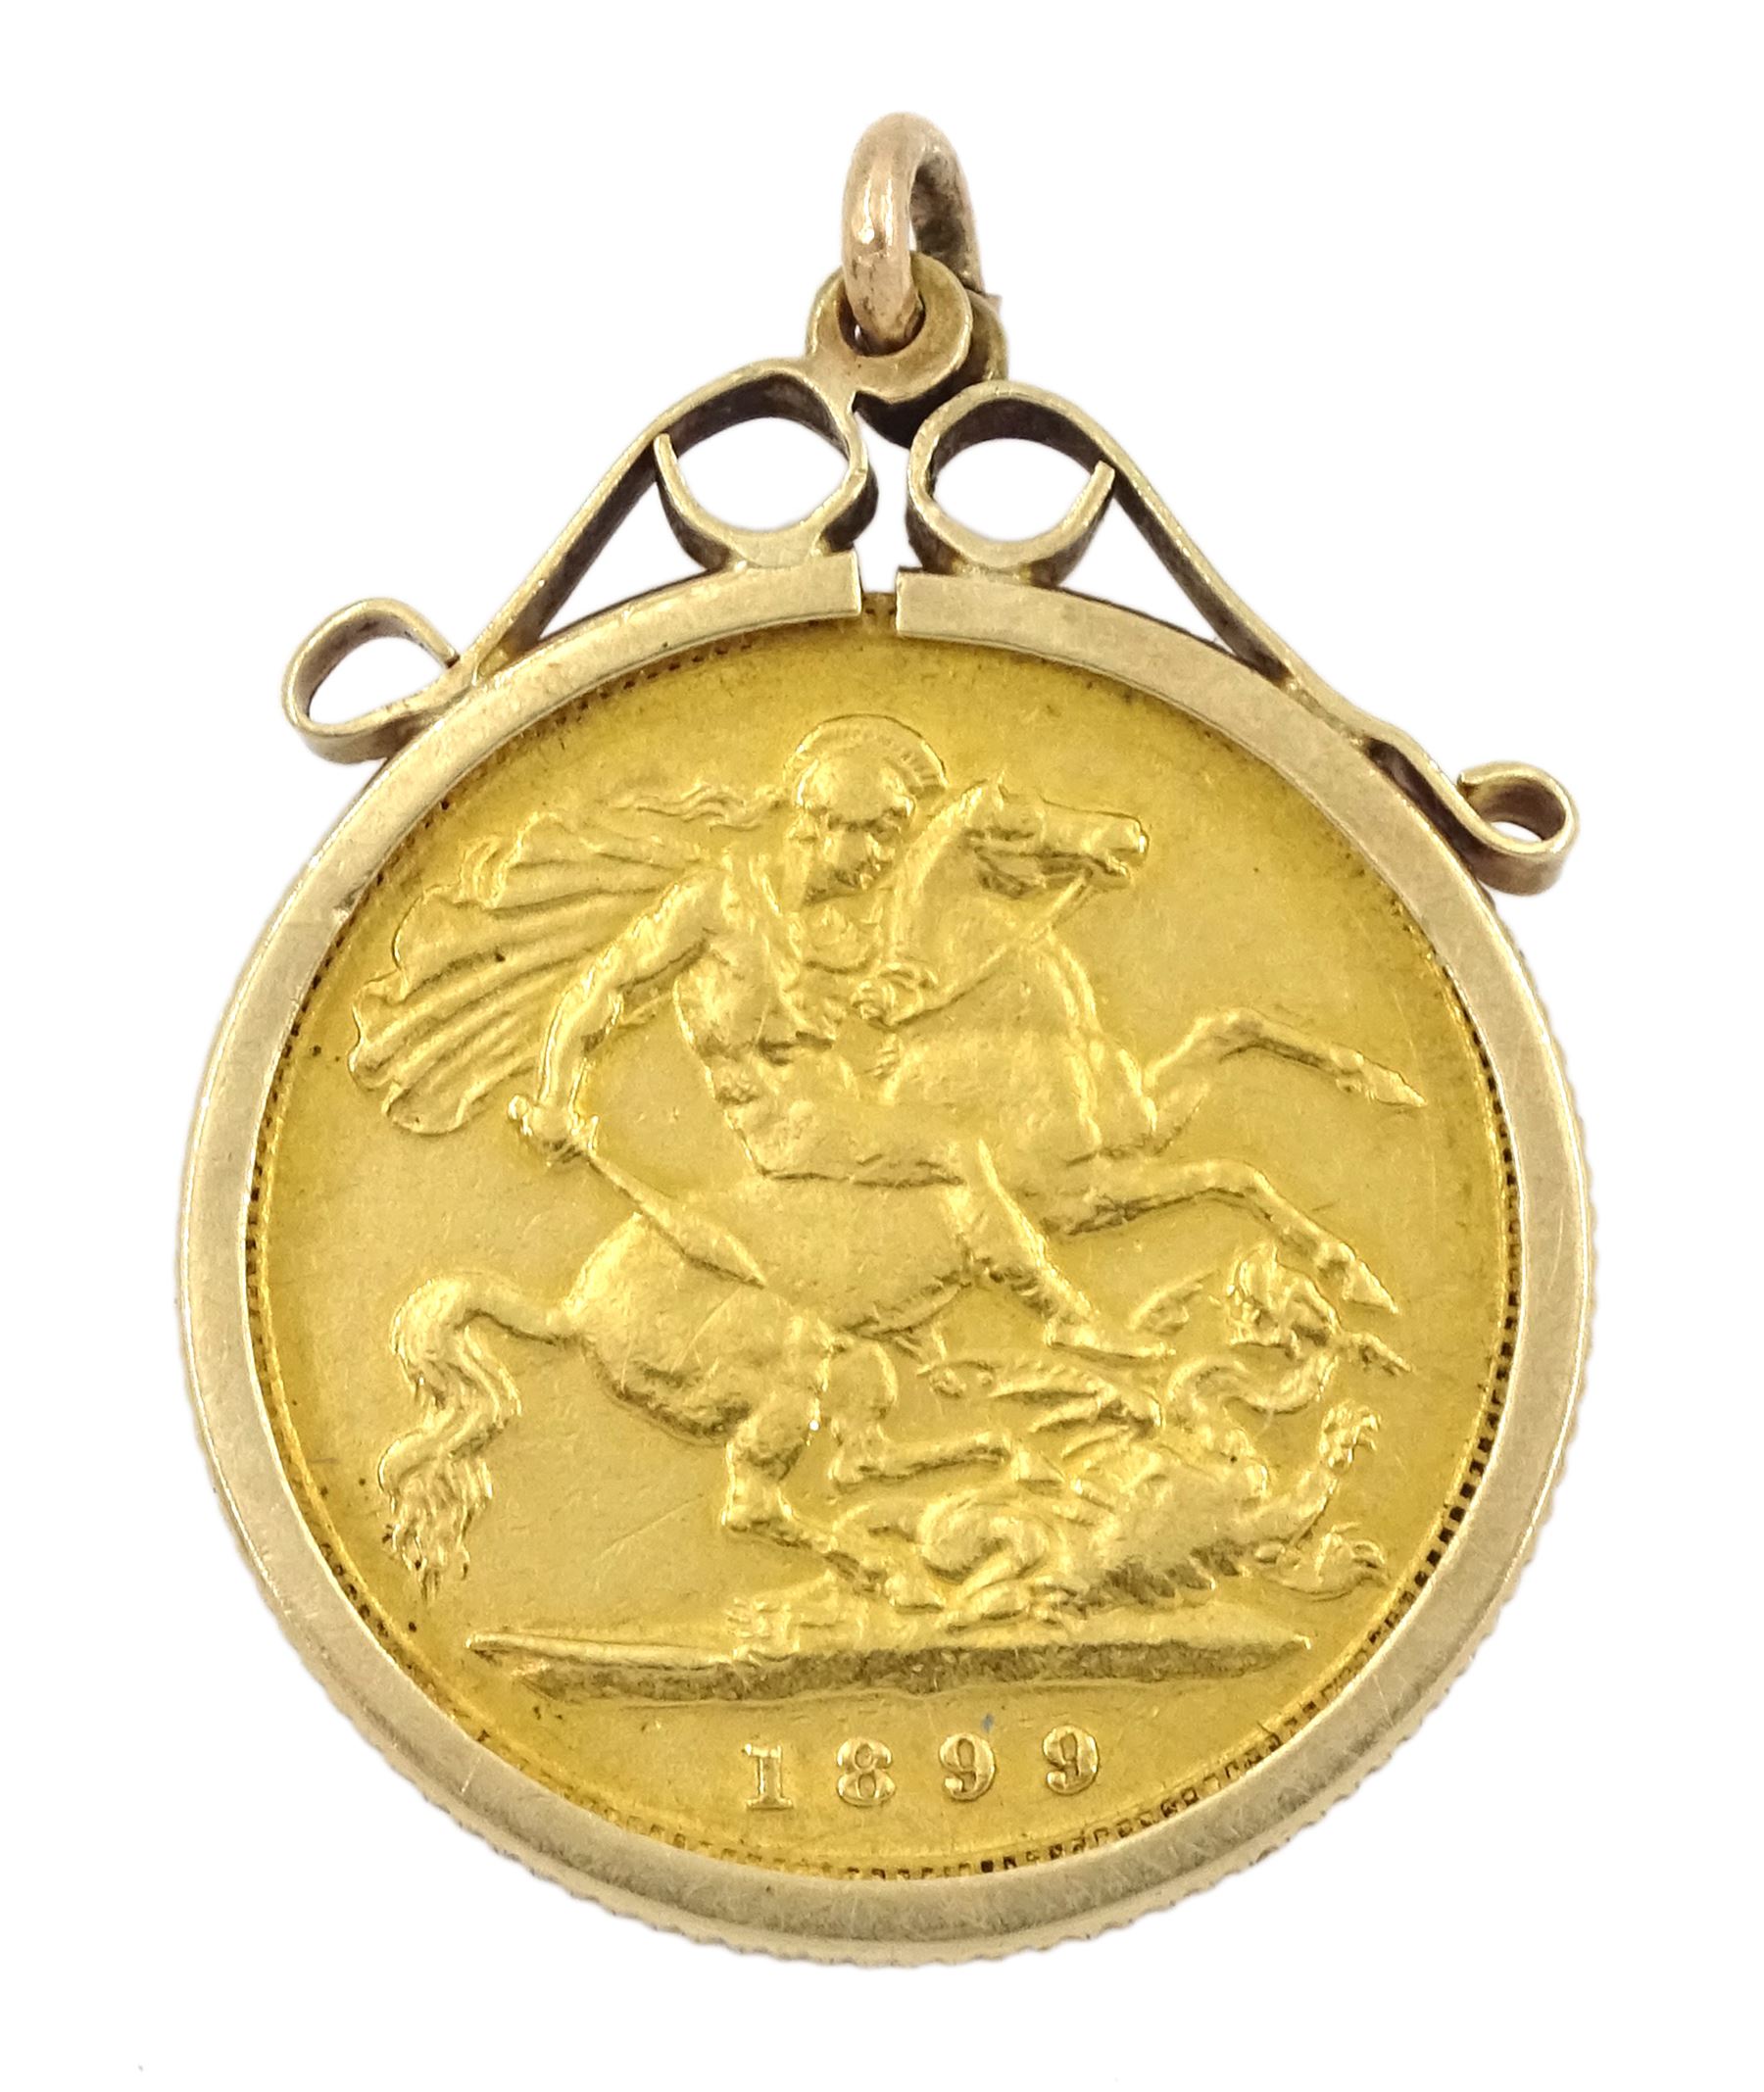 Queen Victoria 1899 gold half sovereign coin - Image 2 of 2